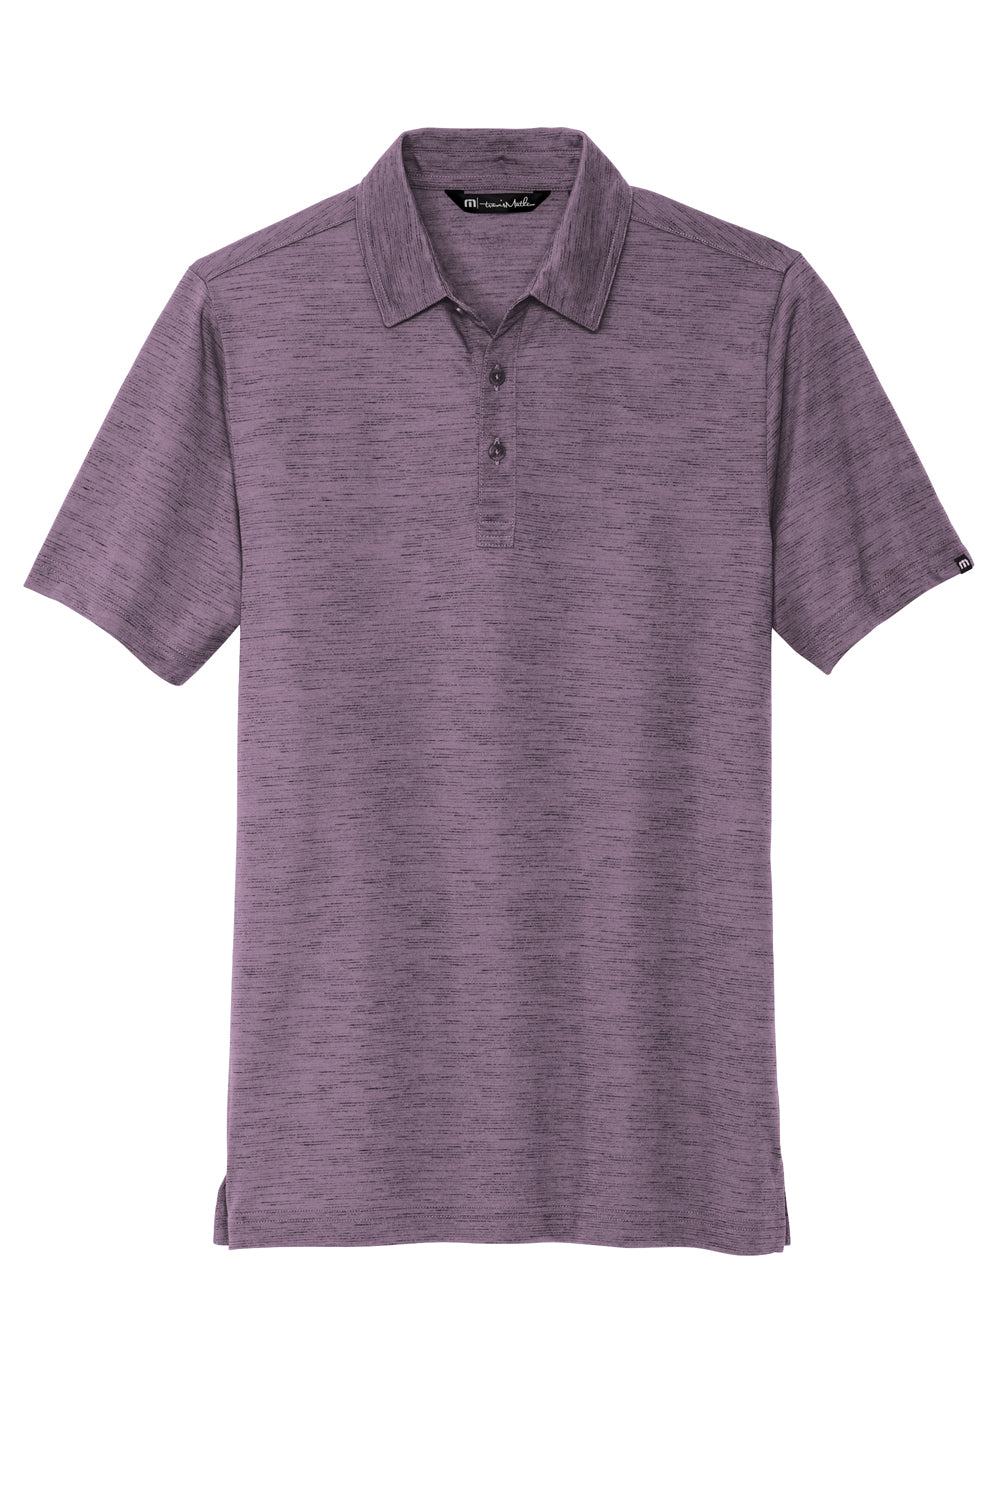 TravisMathew TM1MW451 Mens Auckland Slub Wrinkle Resistant Short Sleeve Polo Shirt Sage Purple Flat Front